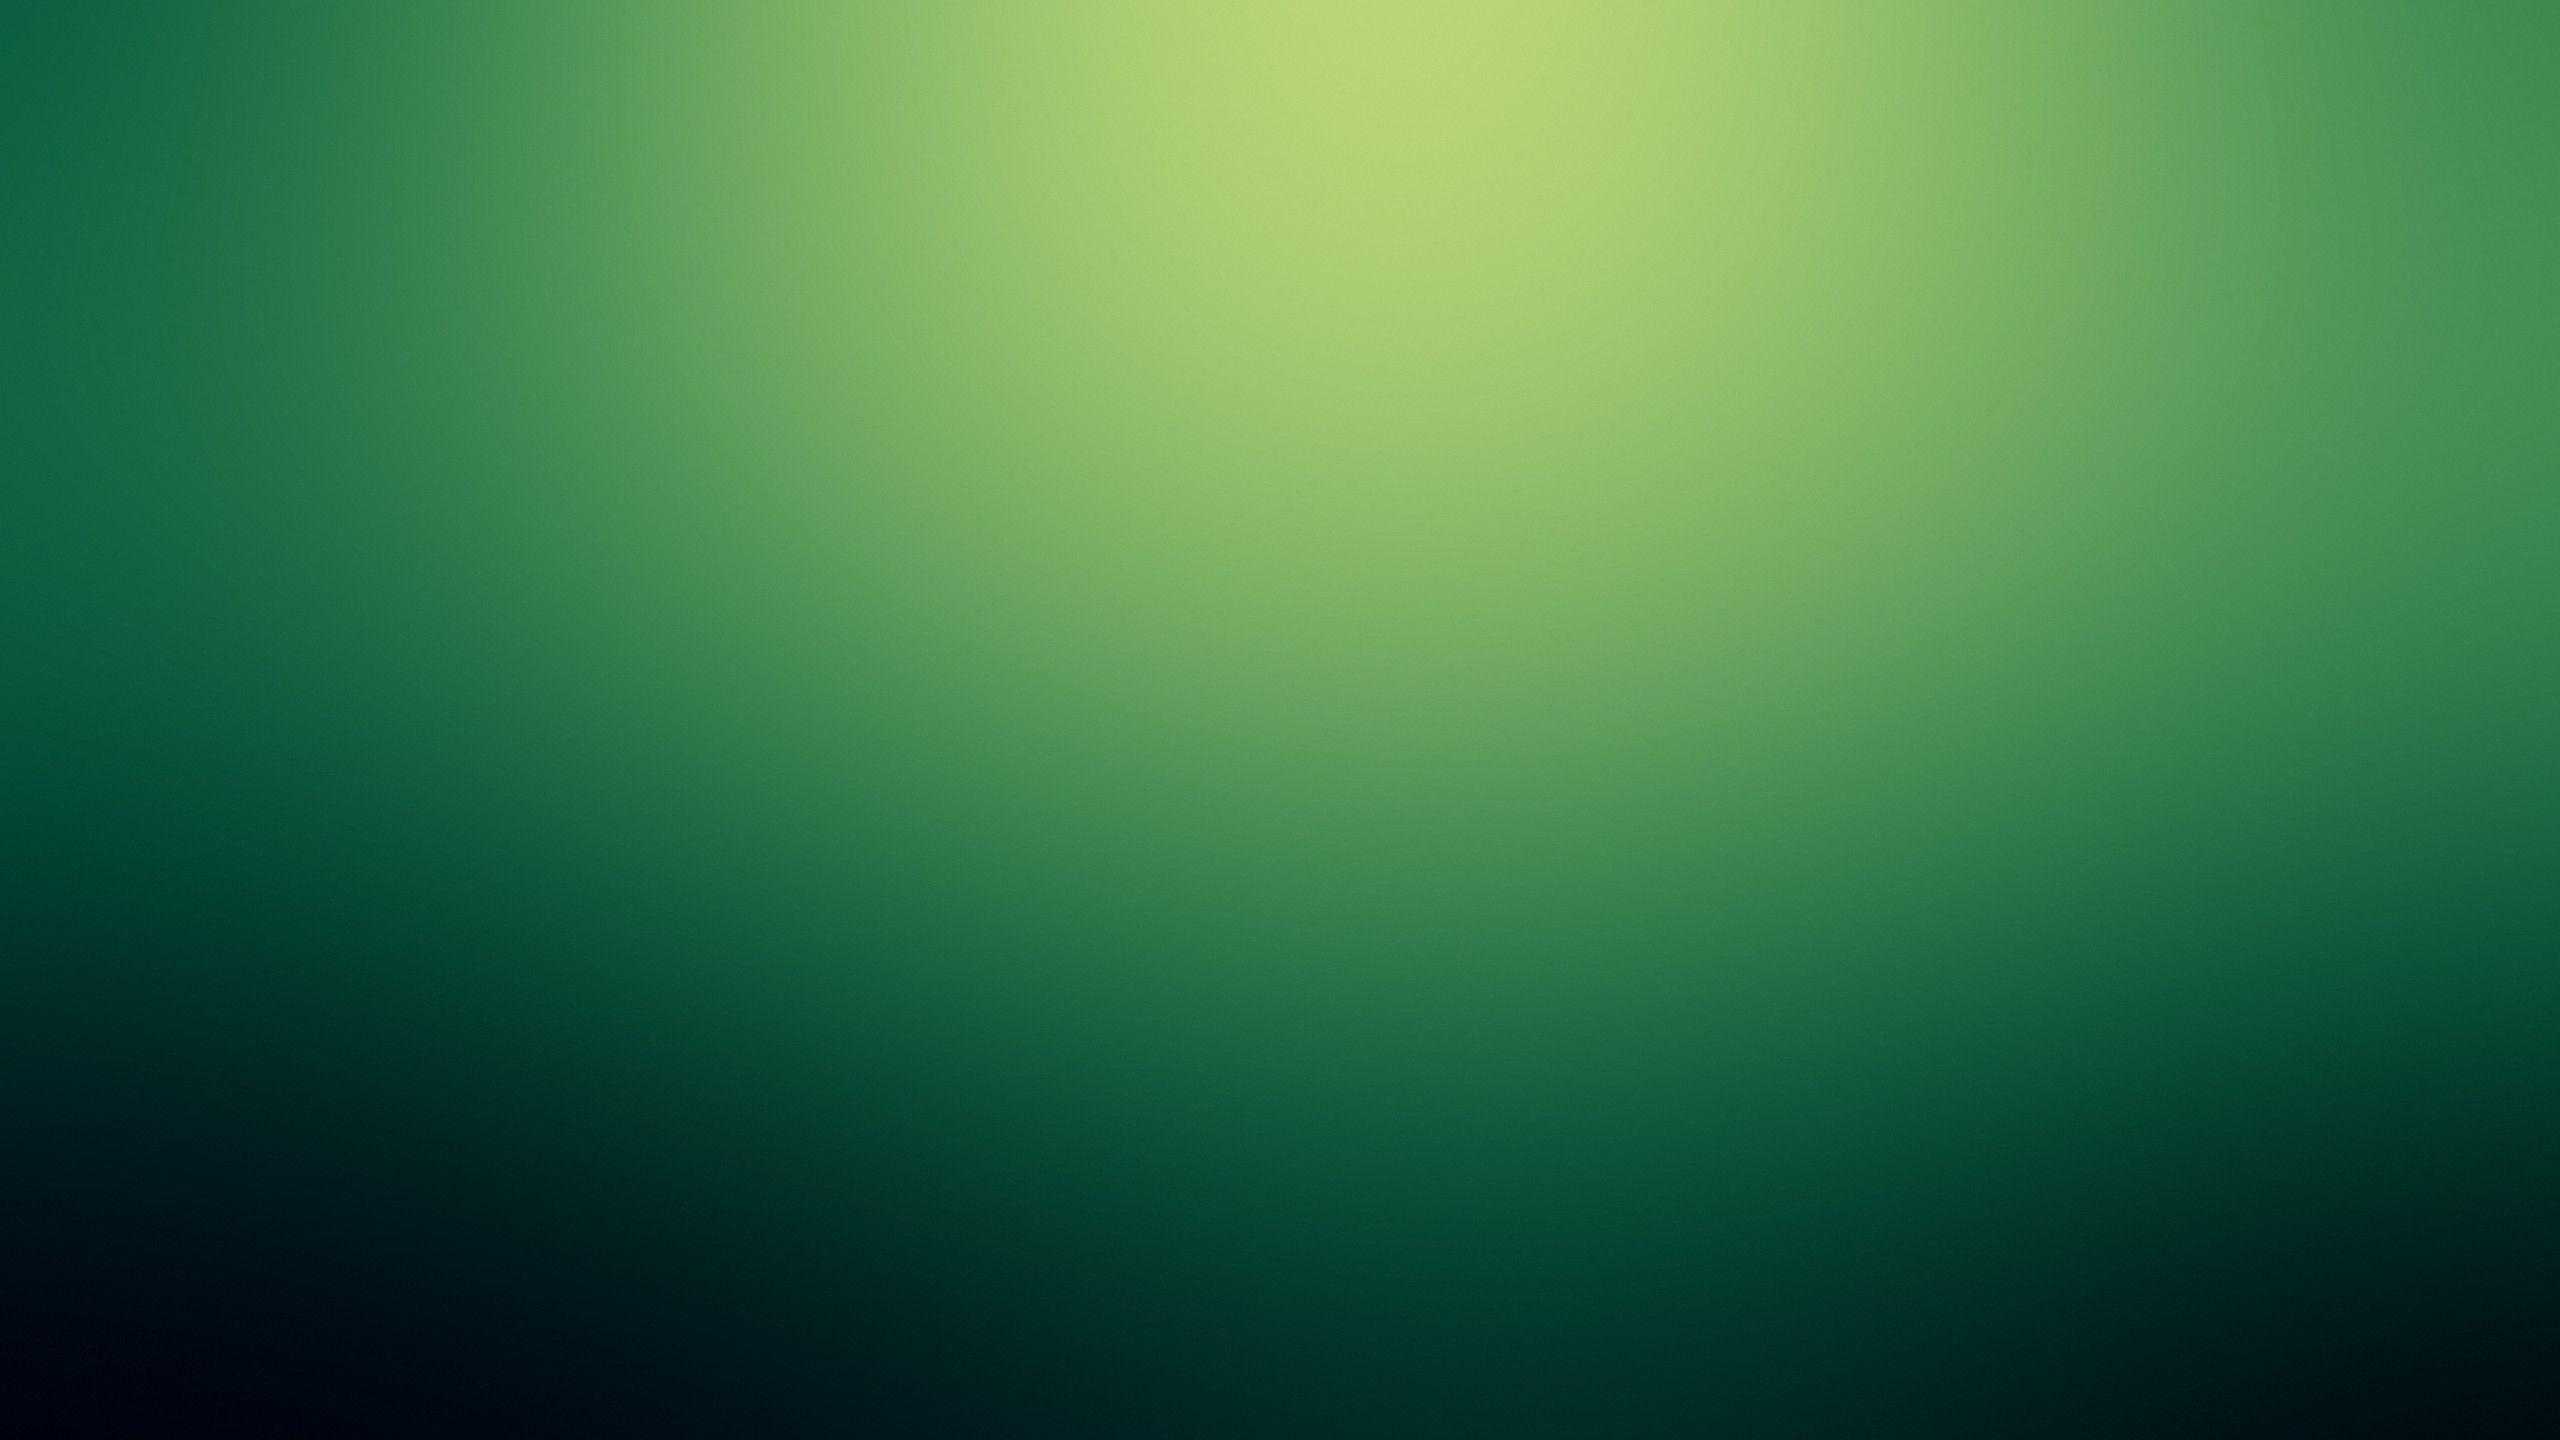 Green Gradient Wallpaper 26051 2560x1440 px